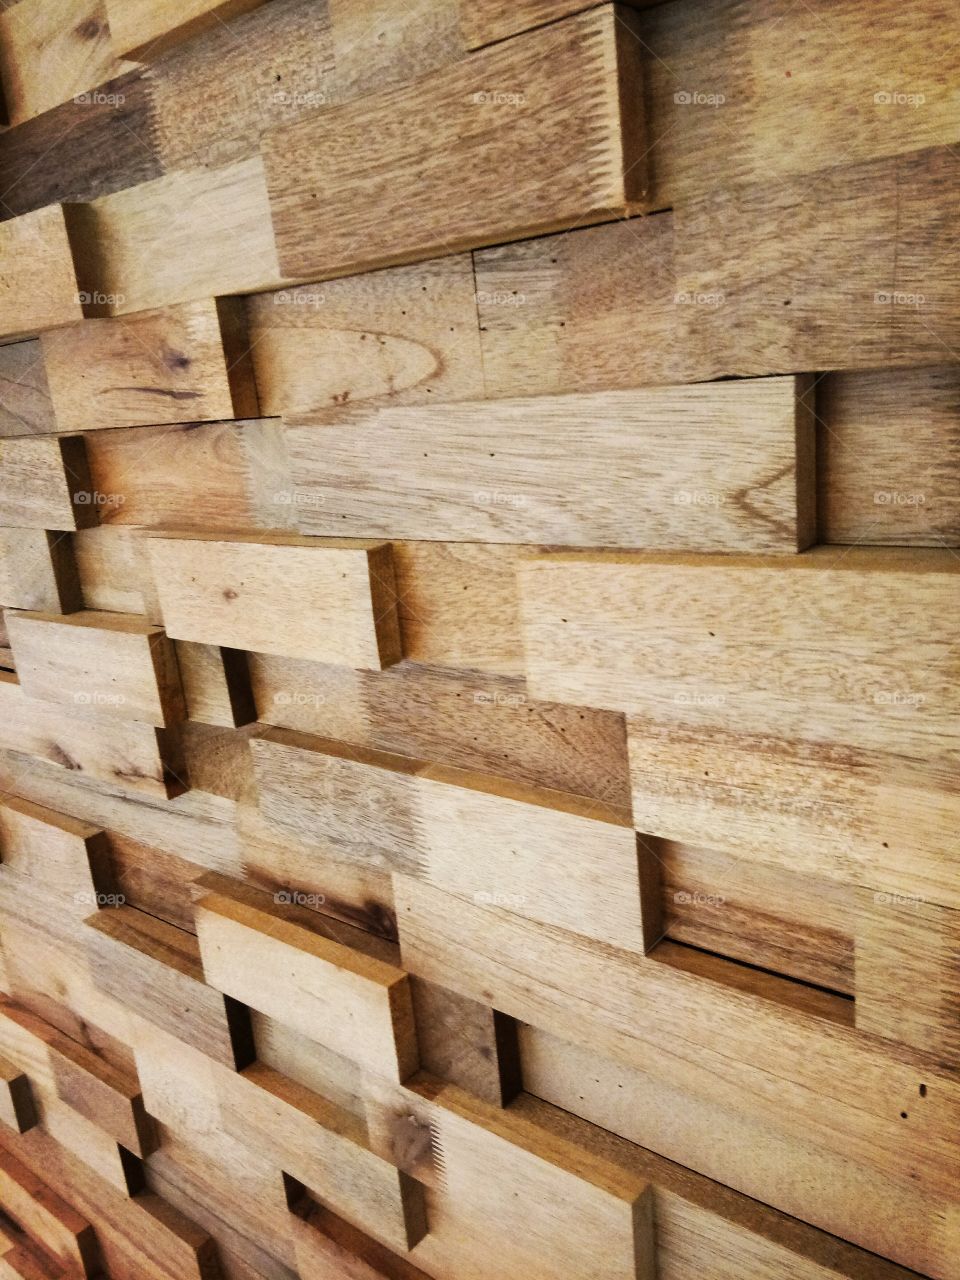 texture
wood
wall